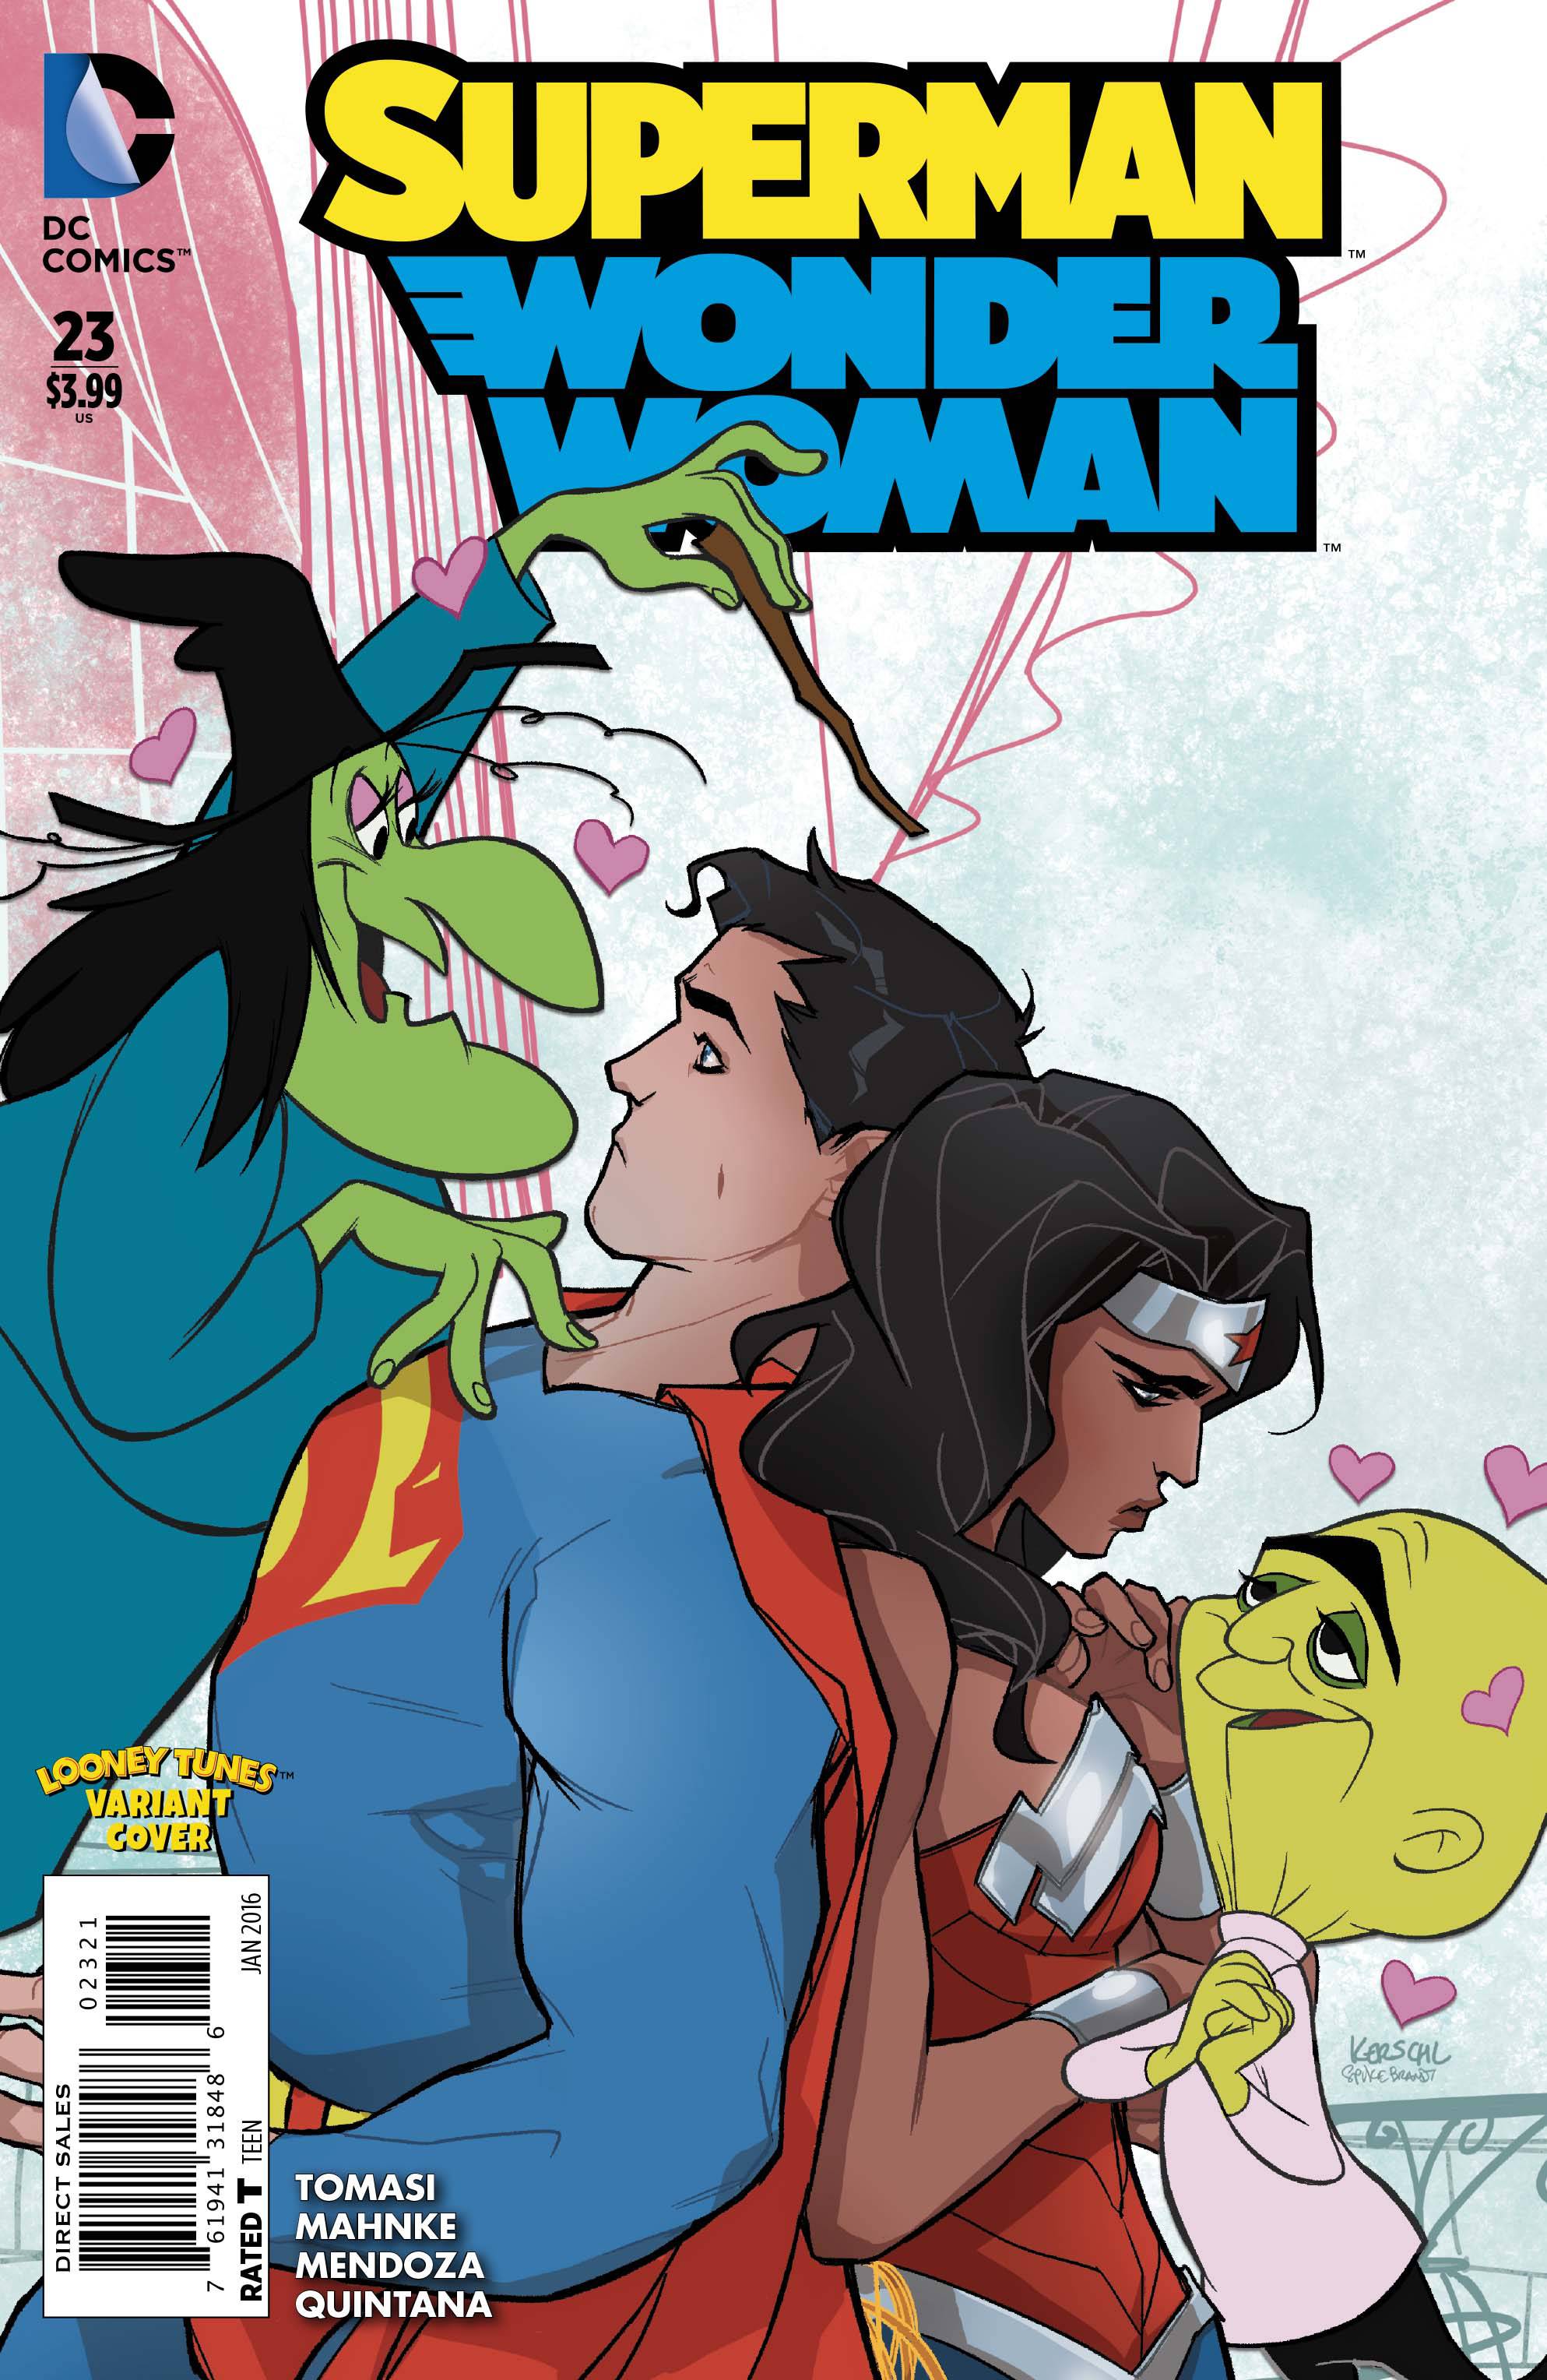 Superman Wonder Woman #23 Looney Tunes Variant Edition (2013)